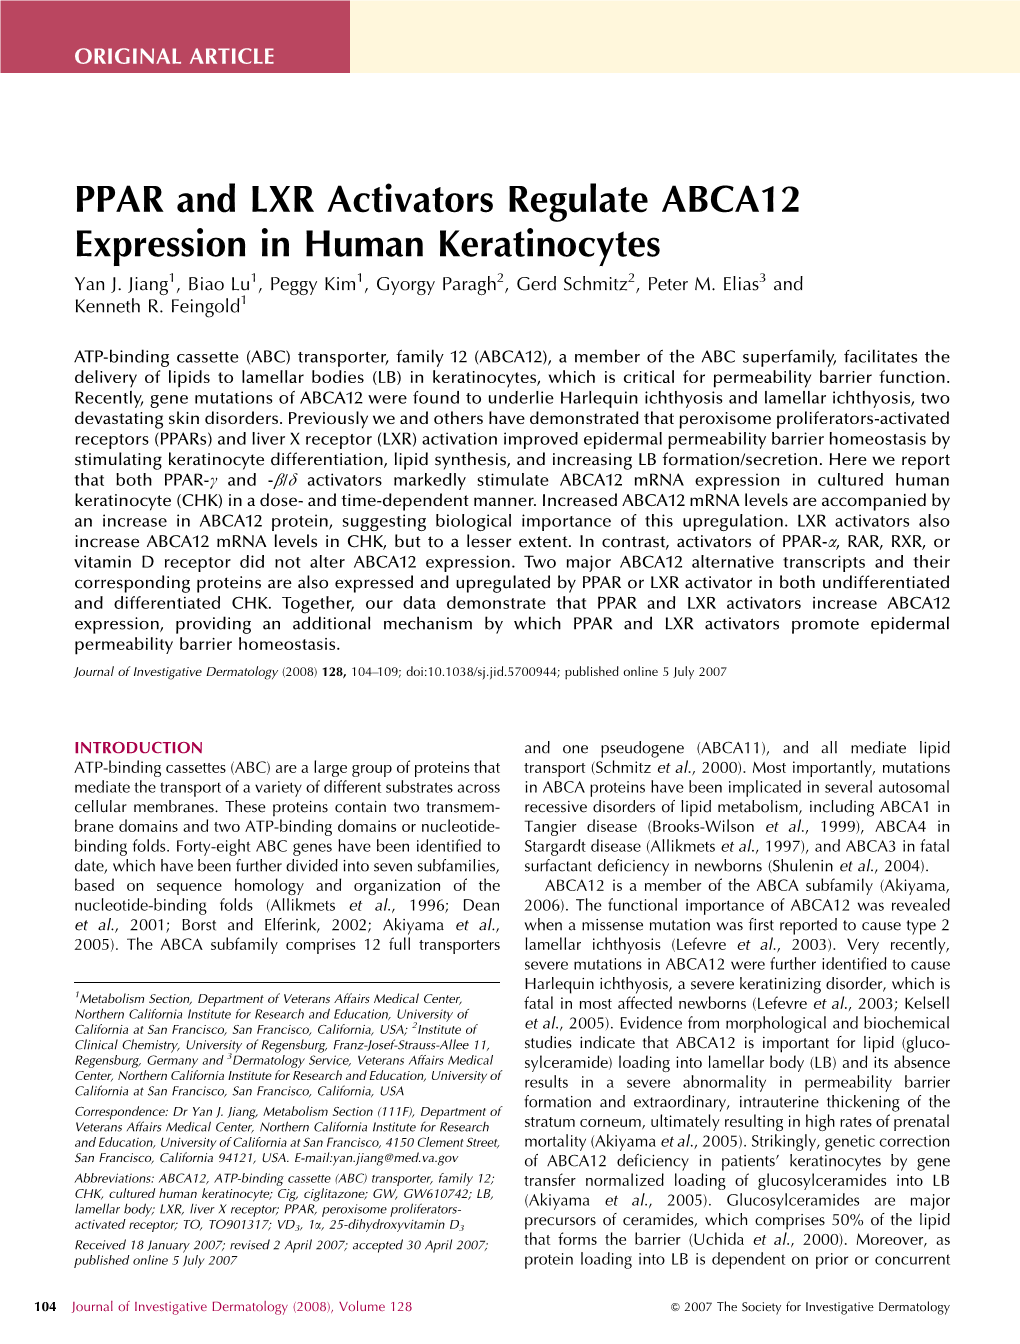 PPAR and LXR Activators Regulate ABCA12 Expression in Human Keratinocytes Yan J